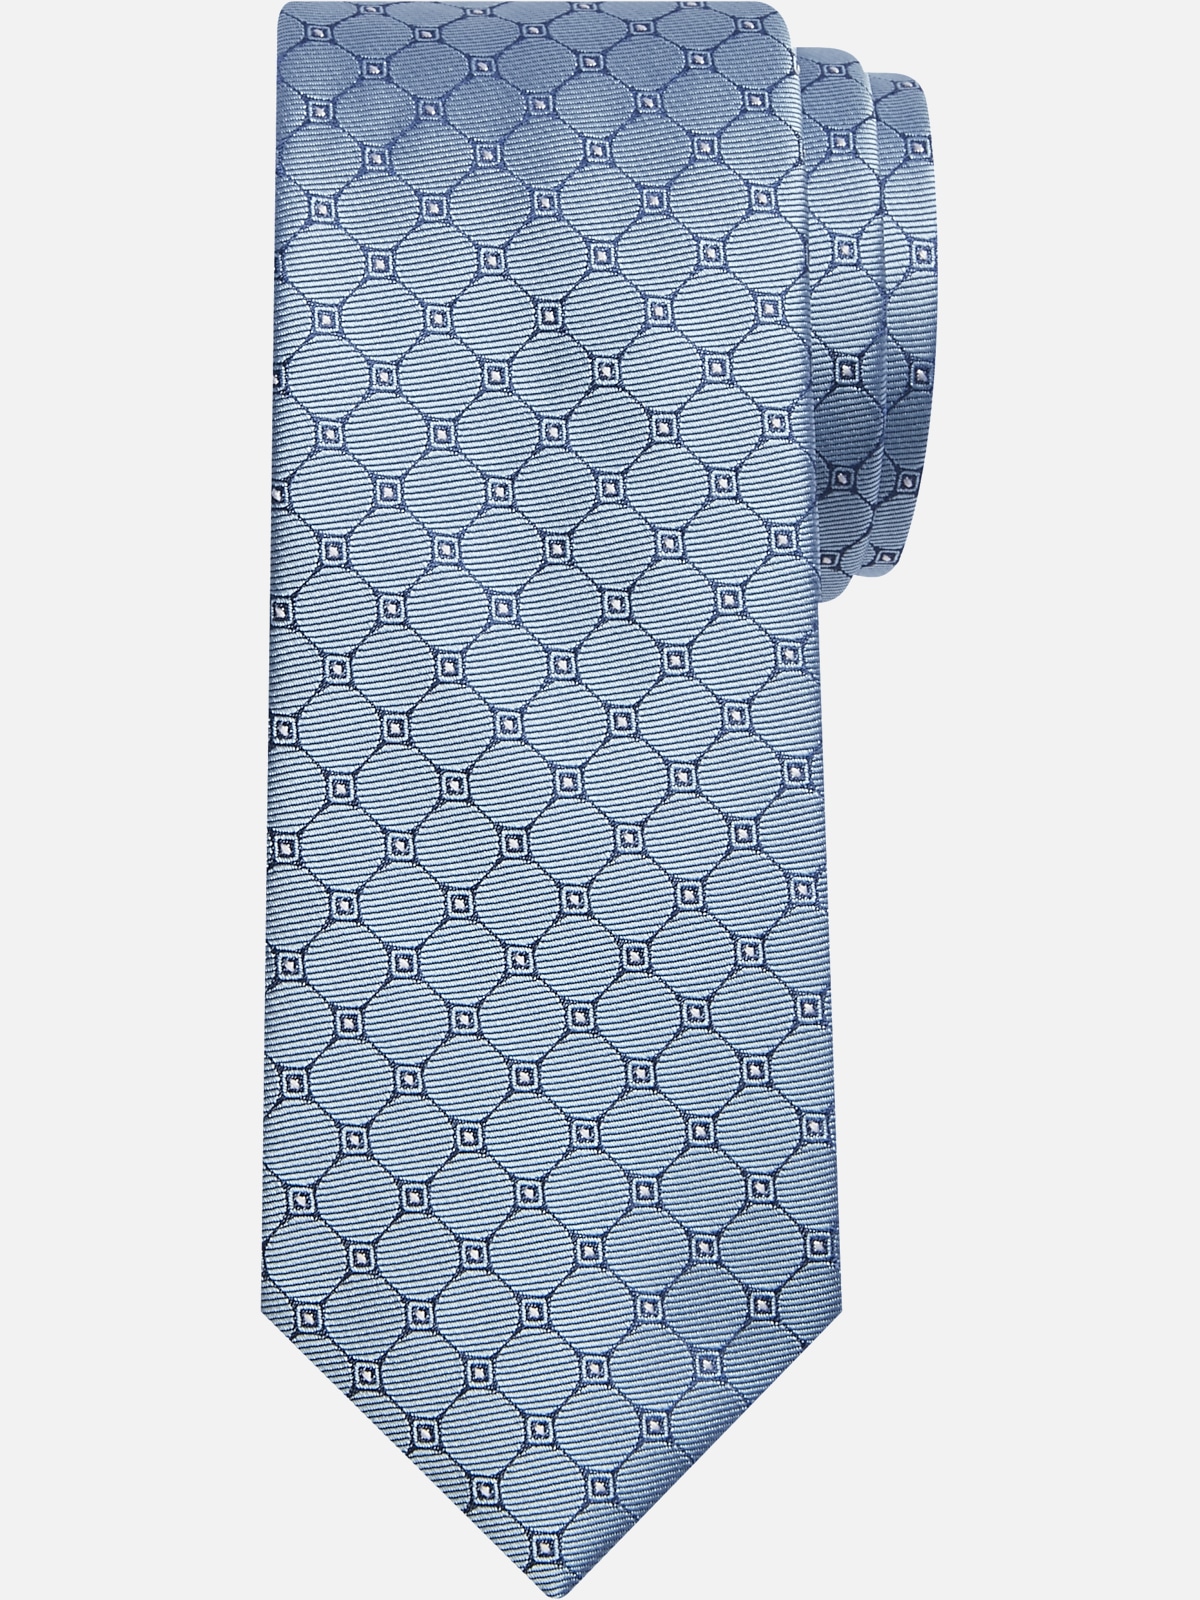 Egara Narrow Linked Tie | All Clearance $39.99| Men's Wearhouse